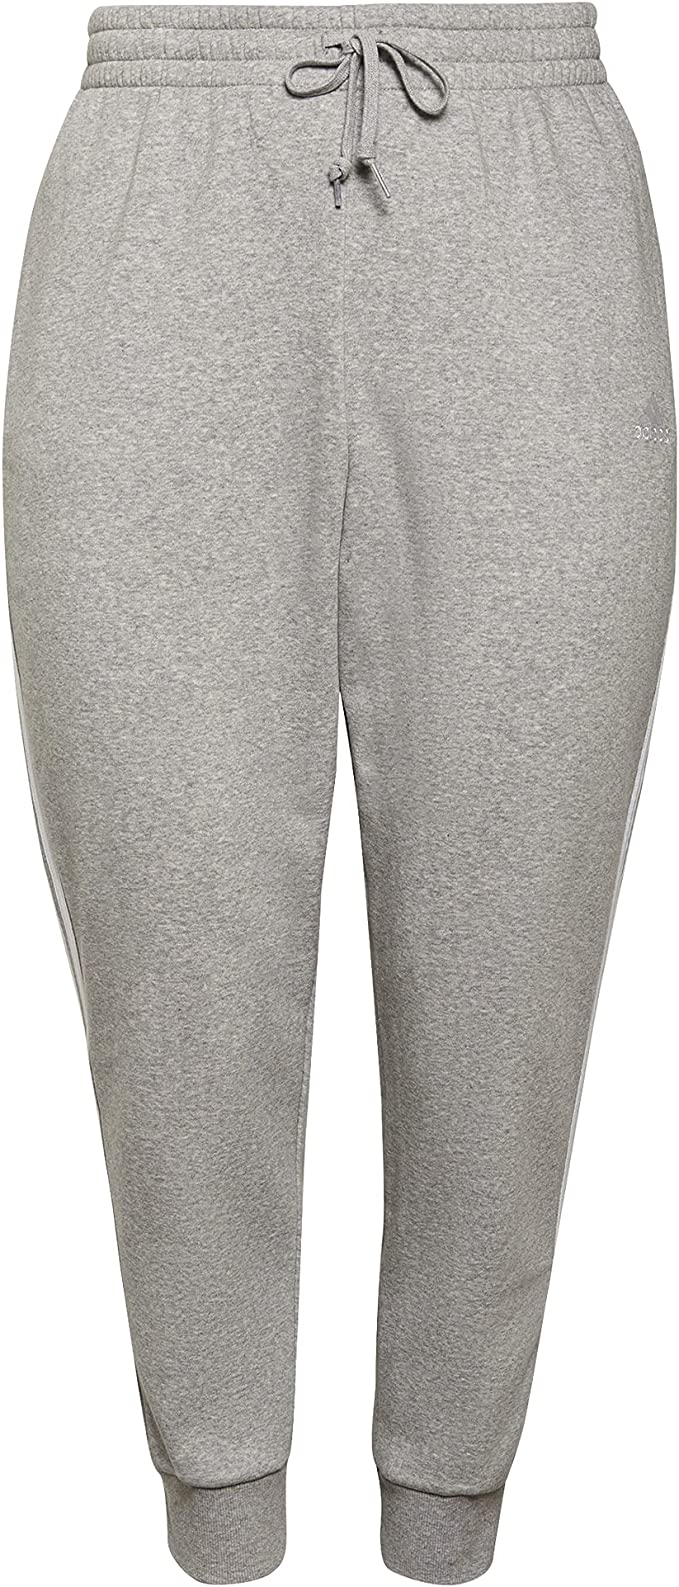 adidas Women's Essentials 3-Stripes Fleece Pants, Medium Grey Heather/White, 3X